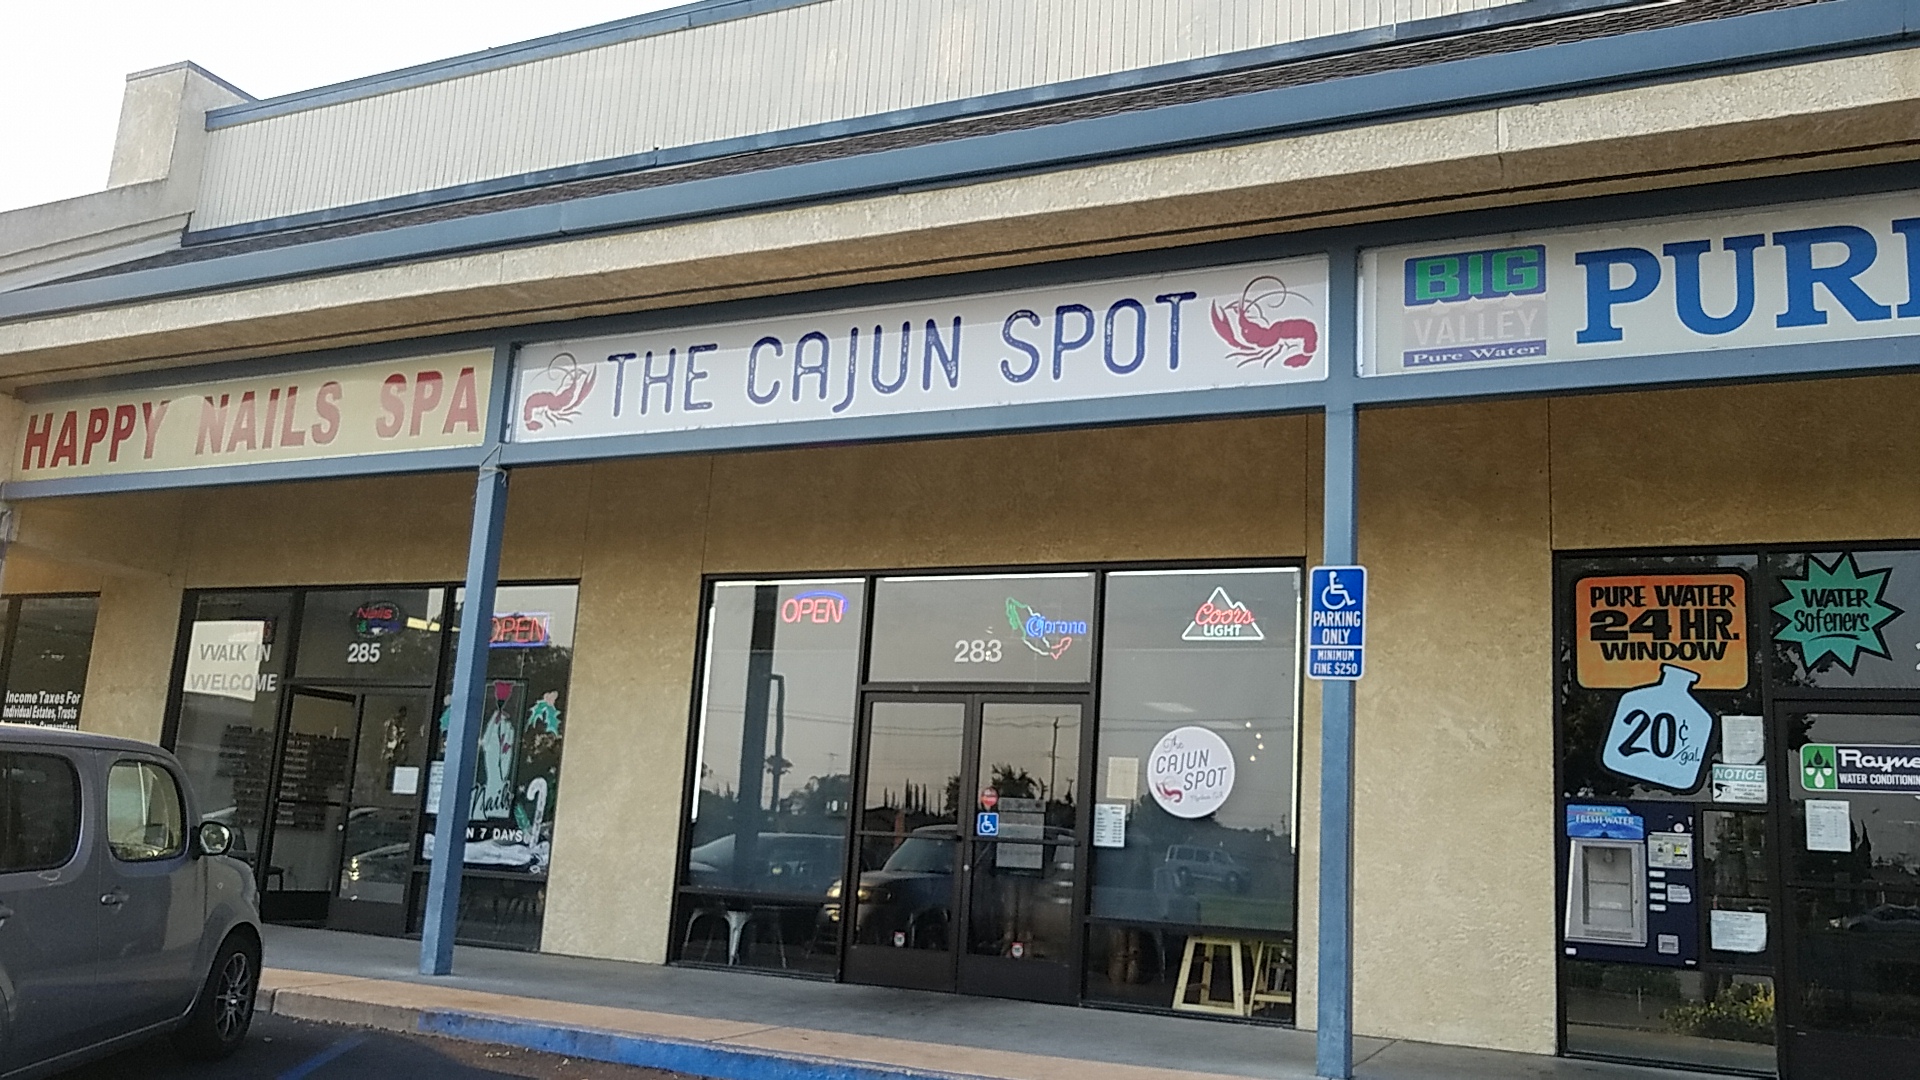 The Cajun Spot